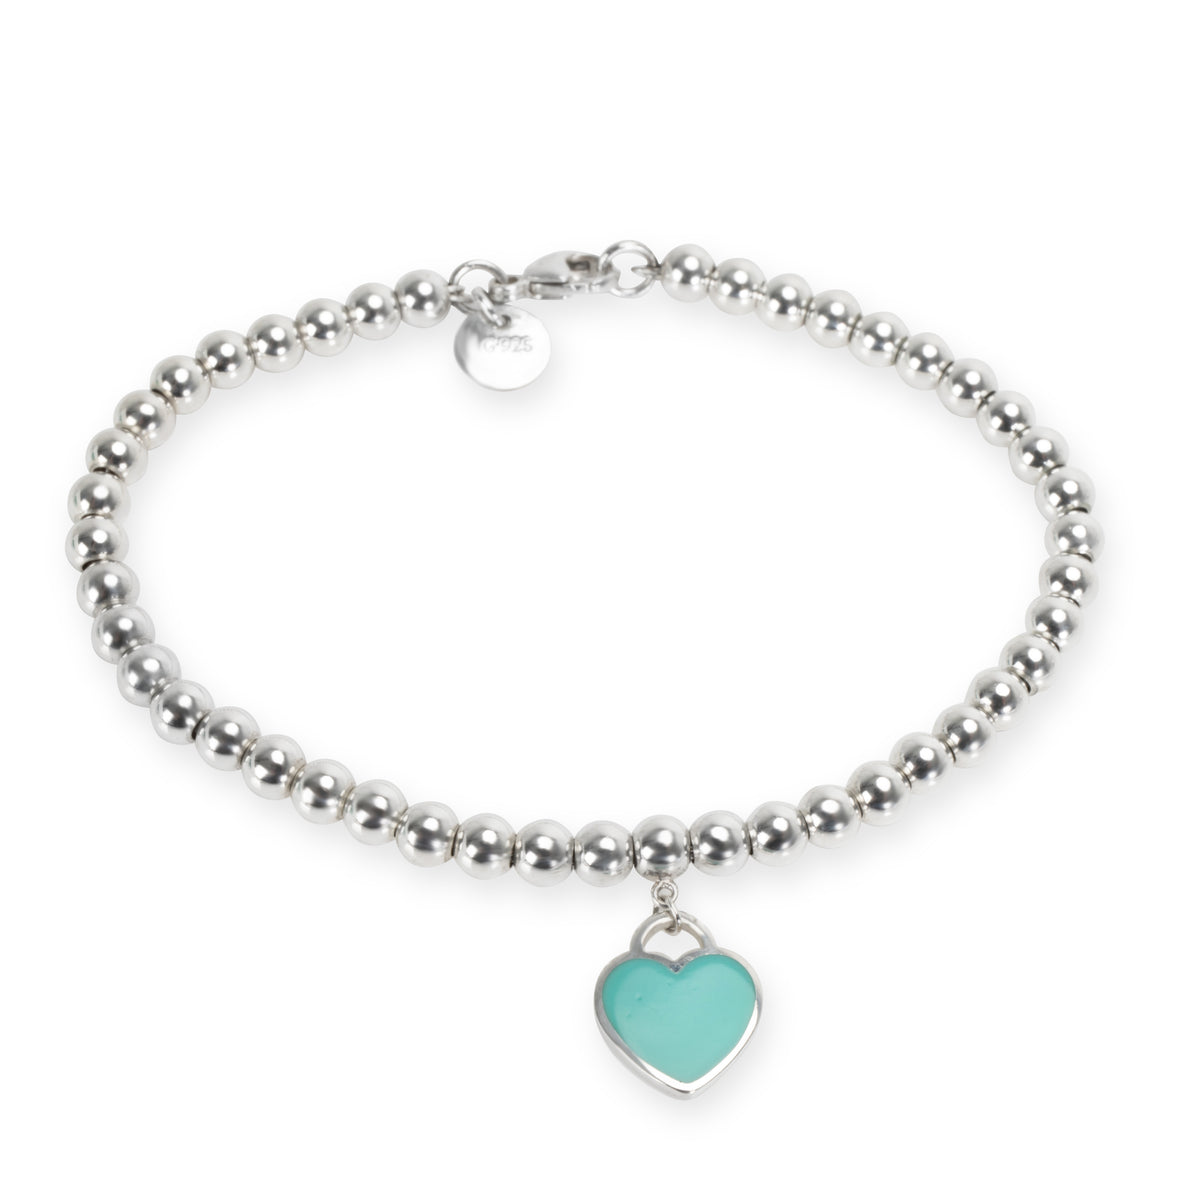 Tiffany & Co. Mini Heart Tag Bead Bracelet in Sterling Silver